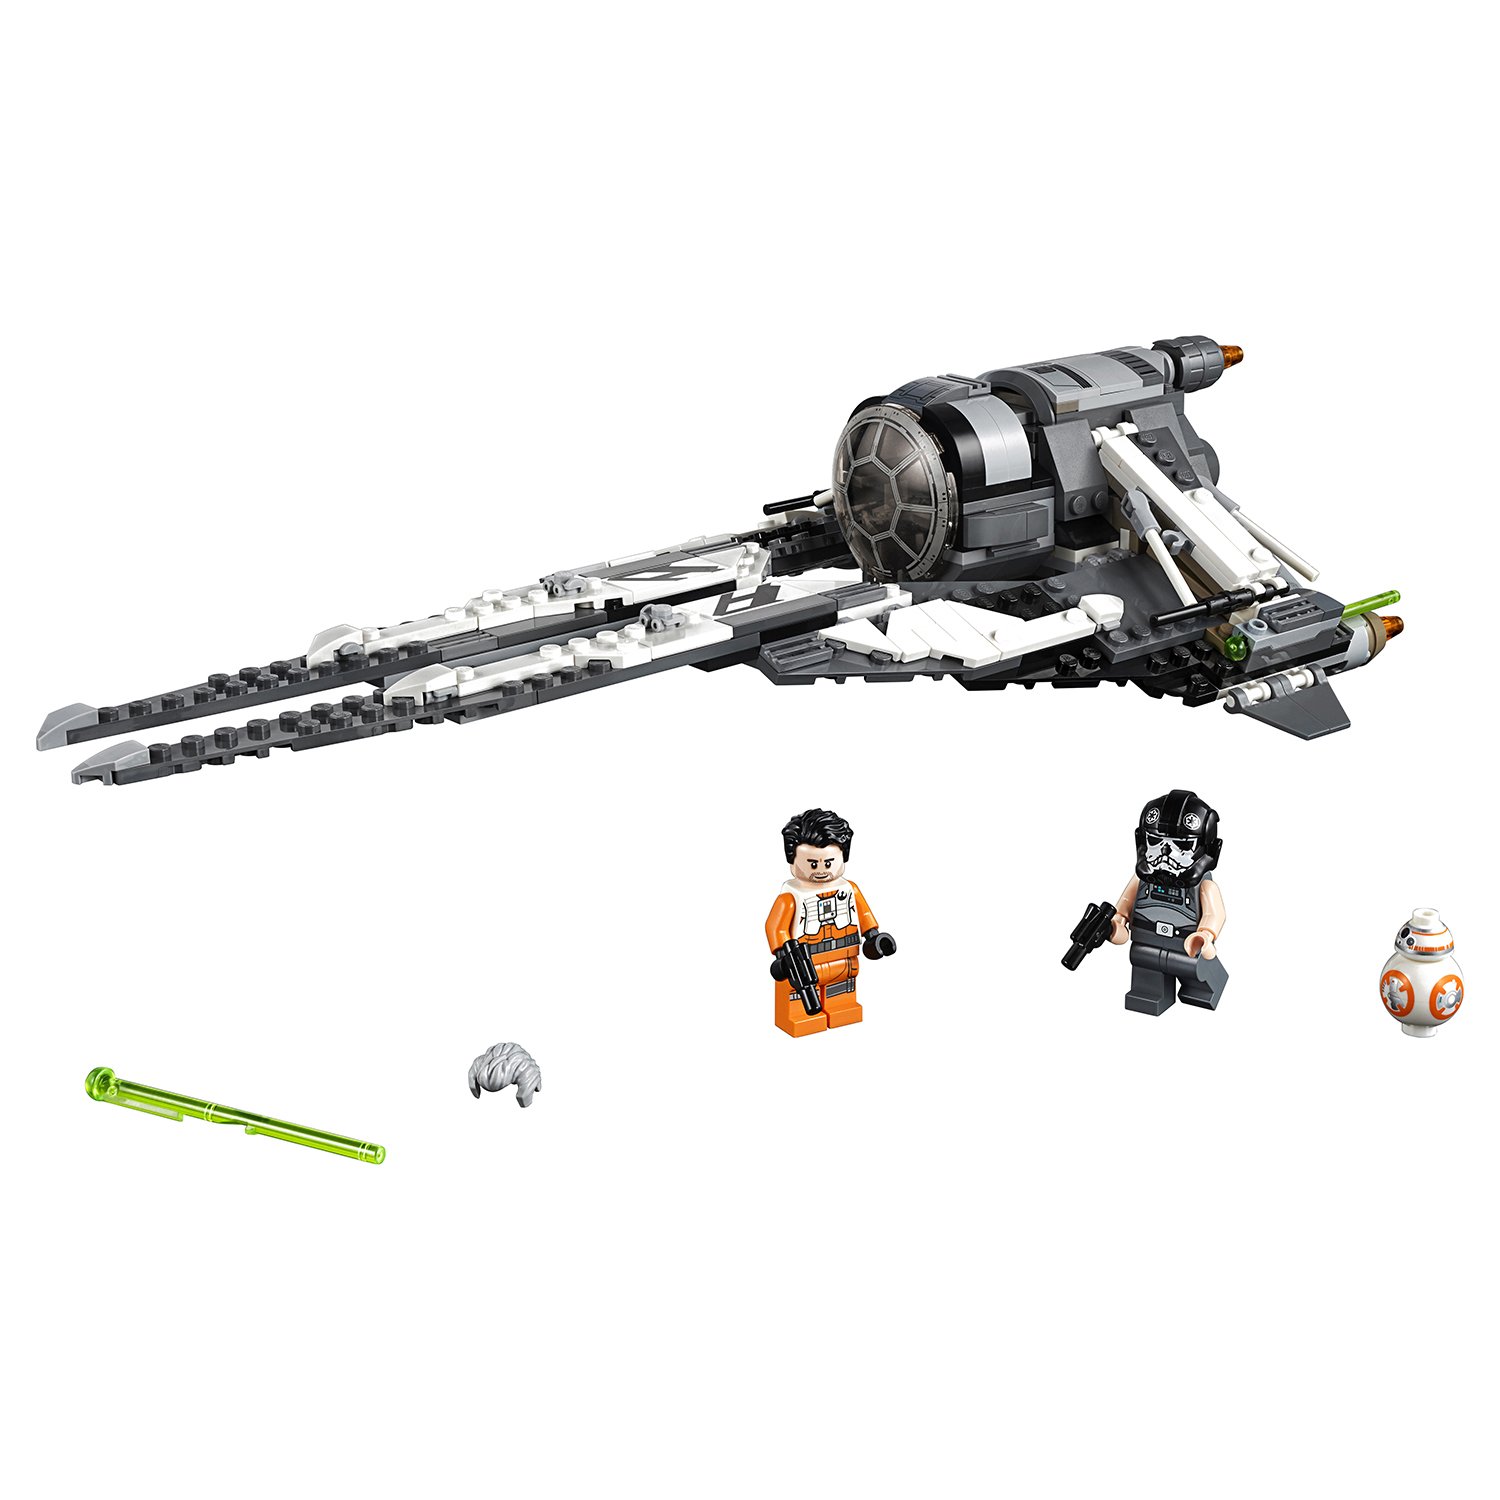 Lego Star Wars 75242 Перехватчик Чёрный АС